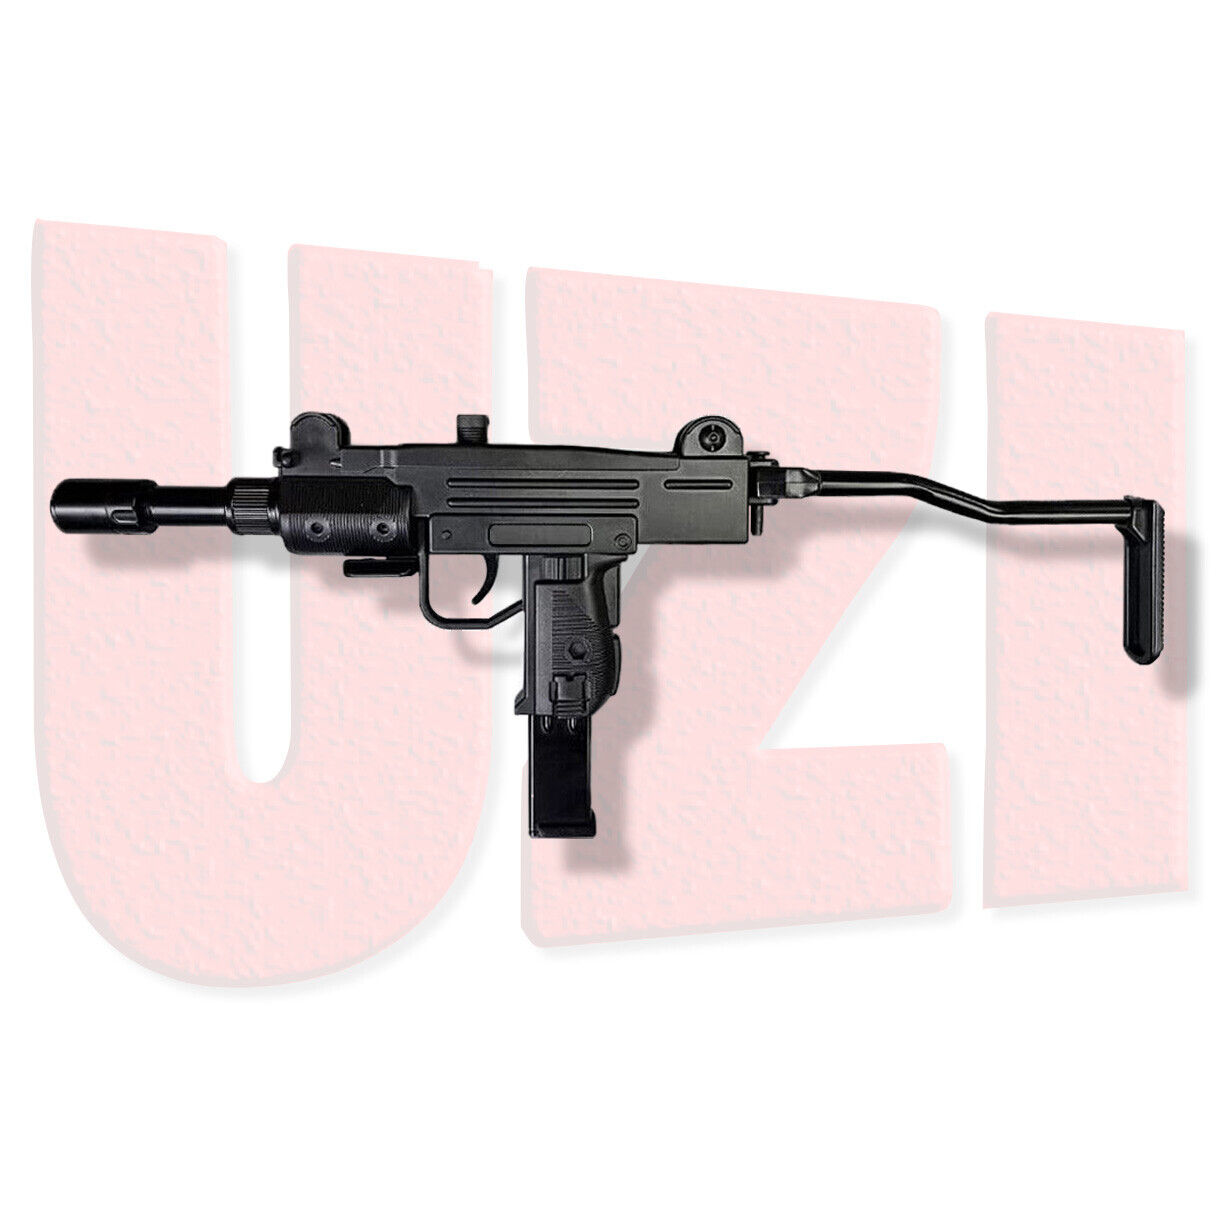 Mini UZI Submachine Gun Pistol LIGHTER ABS/Metal - Jet Torch Flame & Padded Case